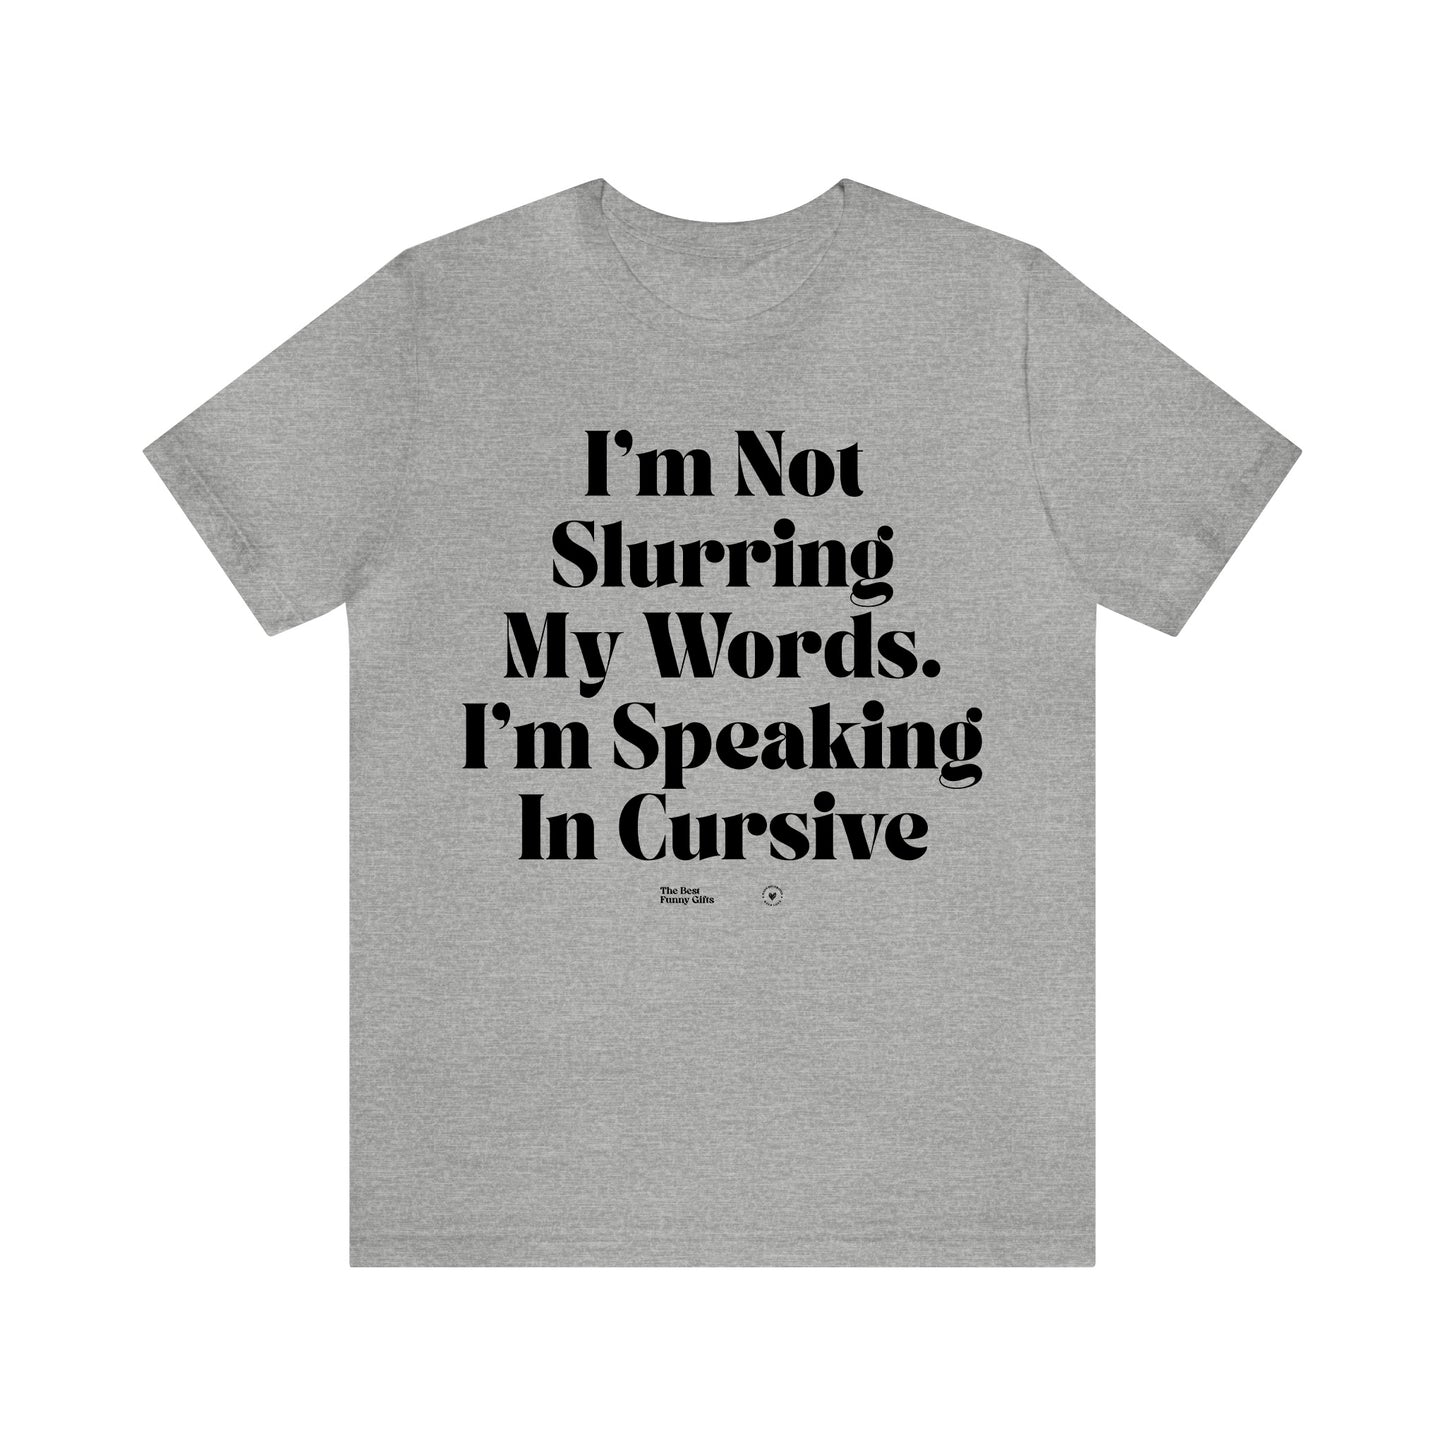 Funny Shirts for Women - I'm Not Slurring My Words. I'm Speaking Cursive - Women’s T Shirts